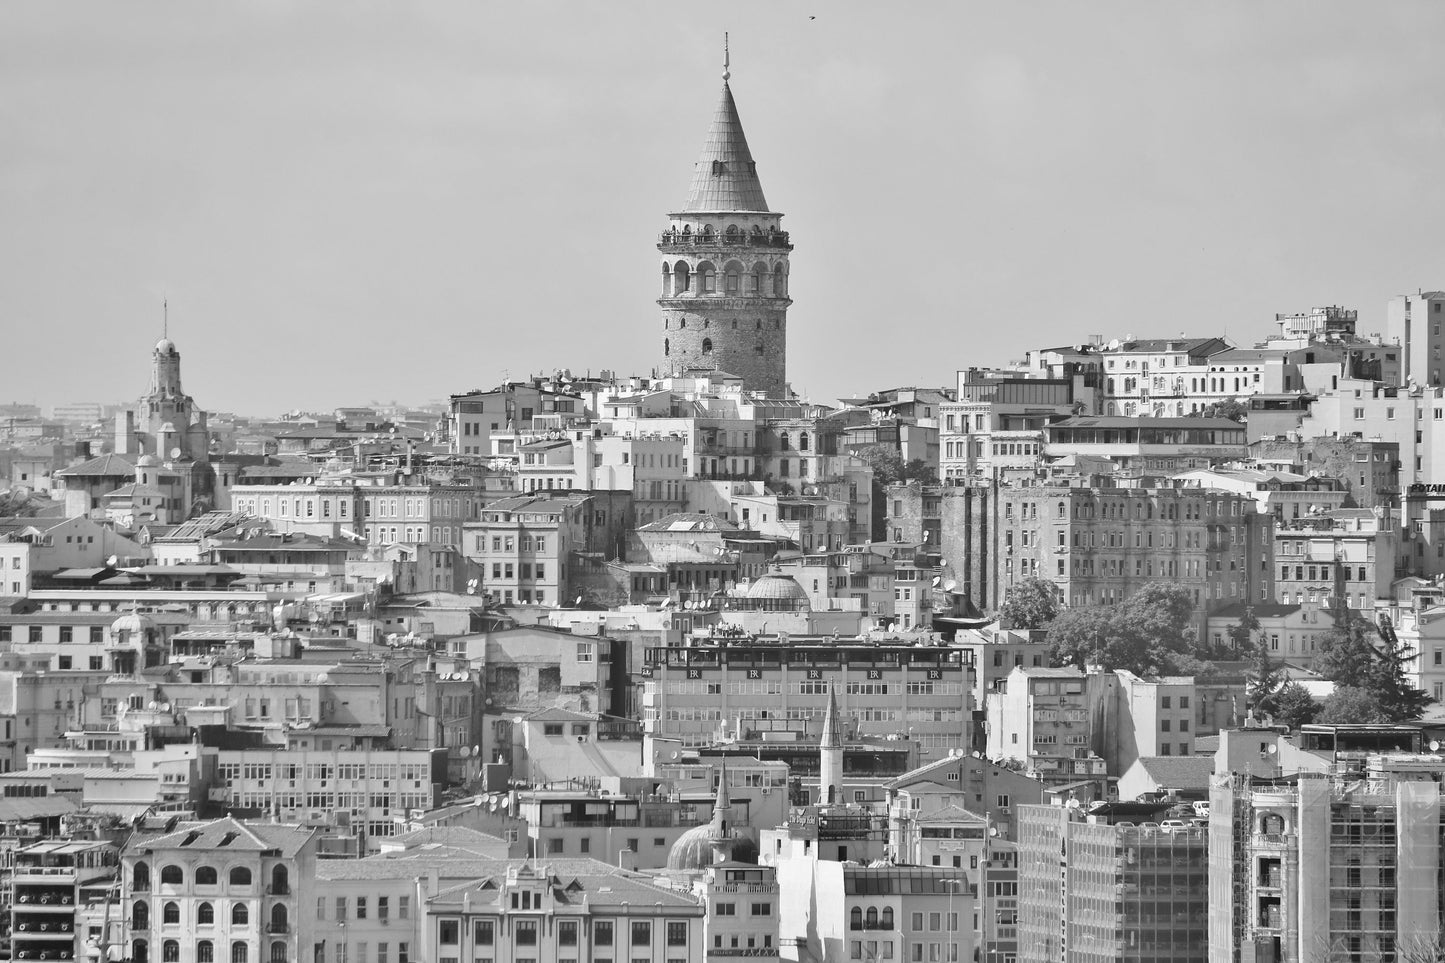 Istanbul Galata Tower Photography Print